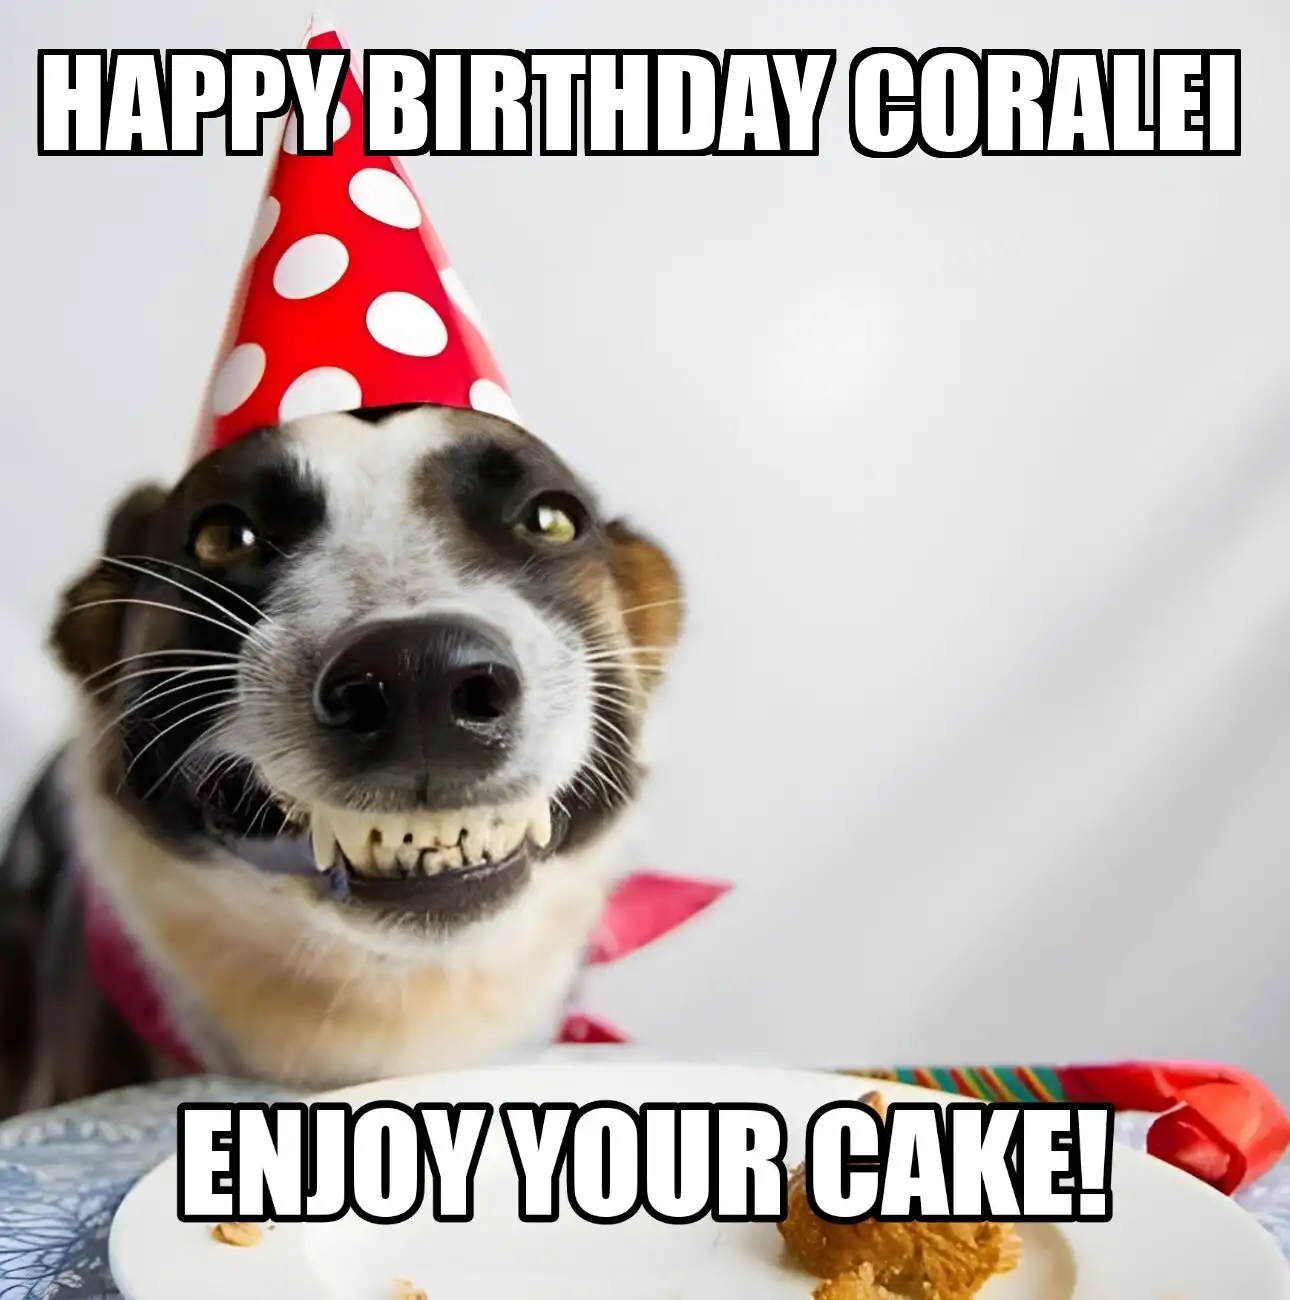 Happy Birthday Coralei Enjoy Your Cake Dog Meme